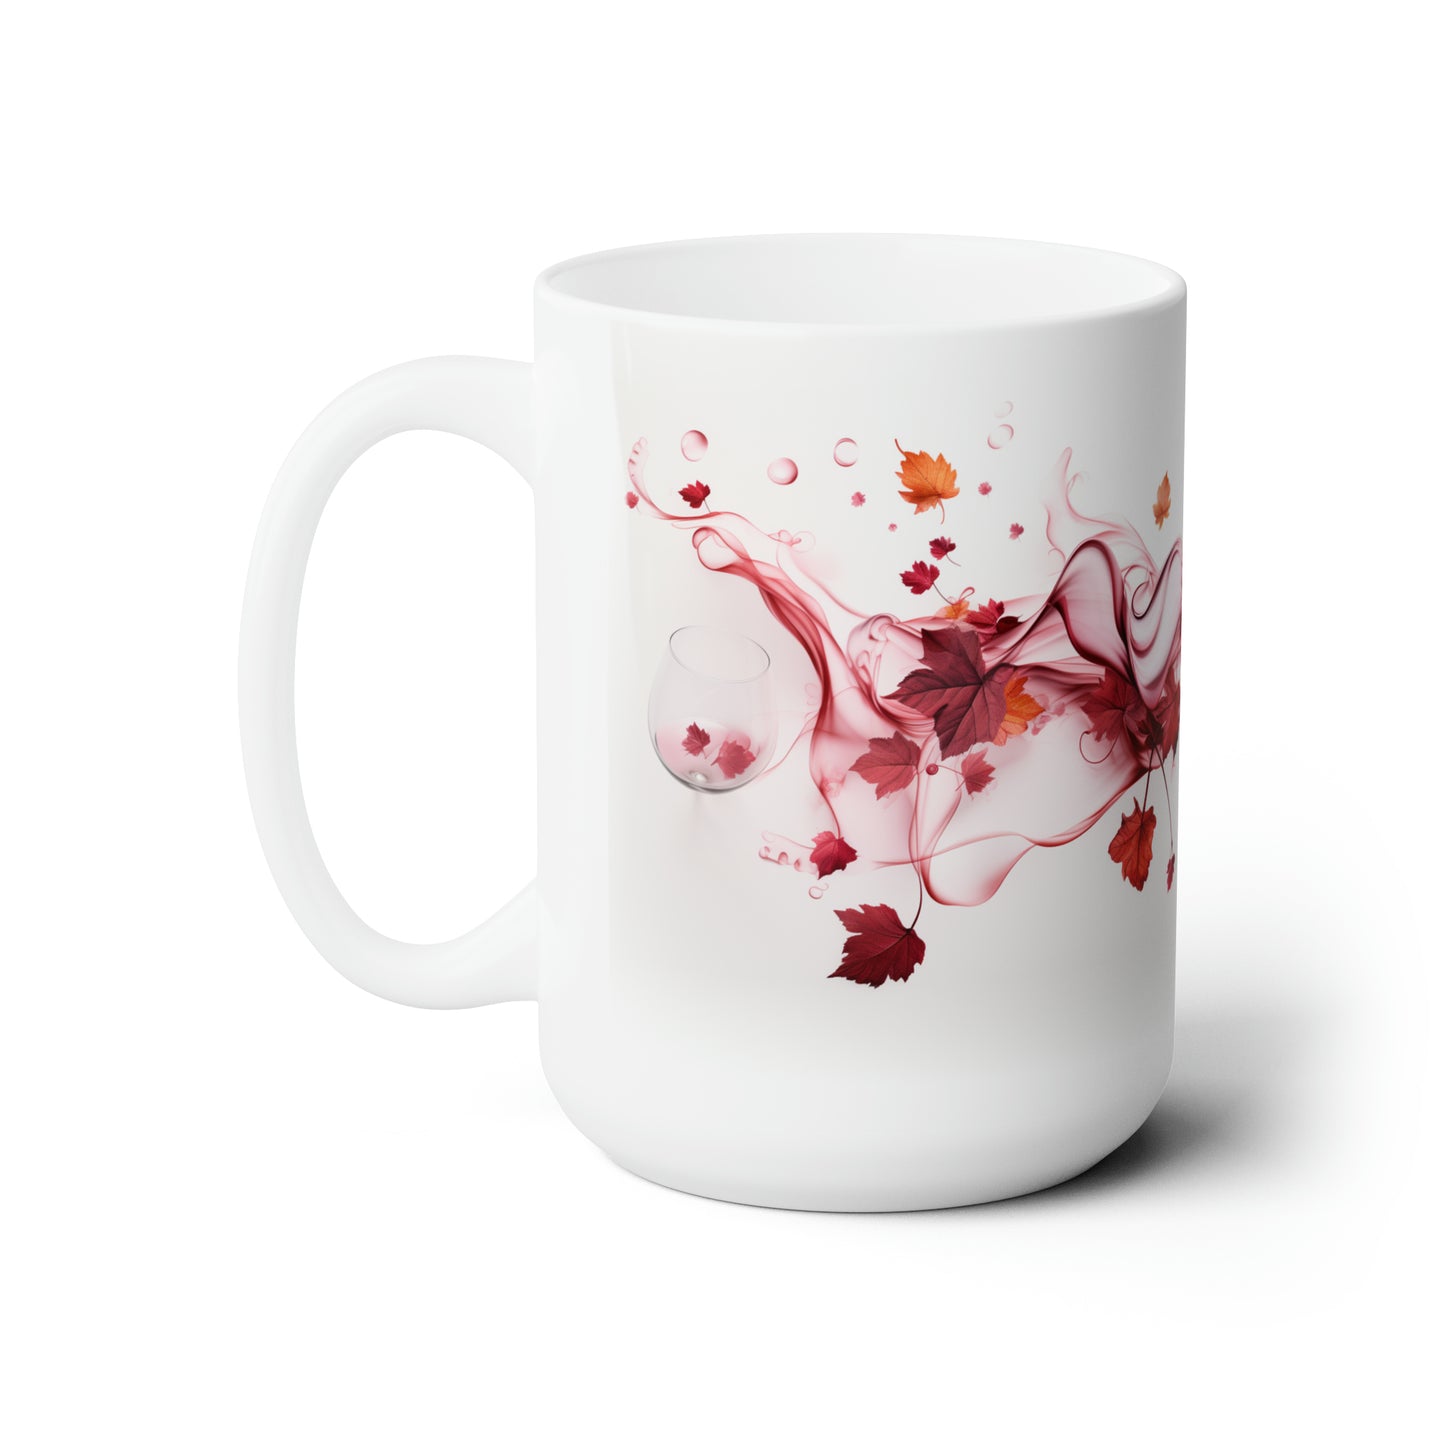 Rustic Elegance: Vineyard-Inspired Coffee Mug with Grape Leaves and Vines Pattern